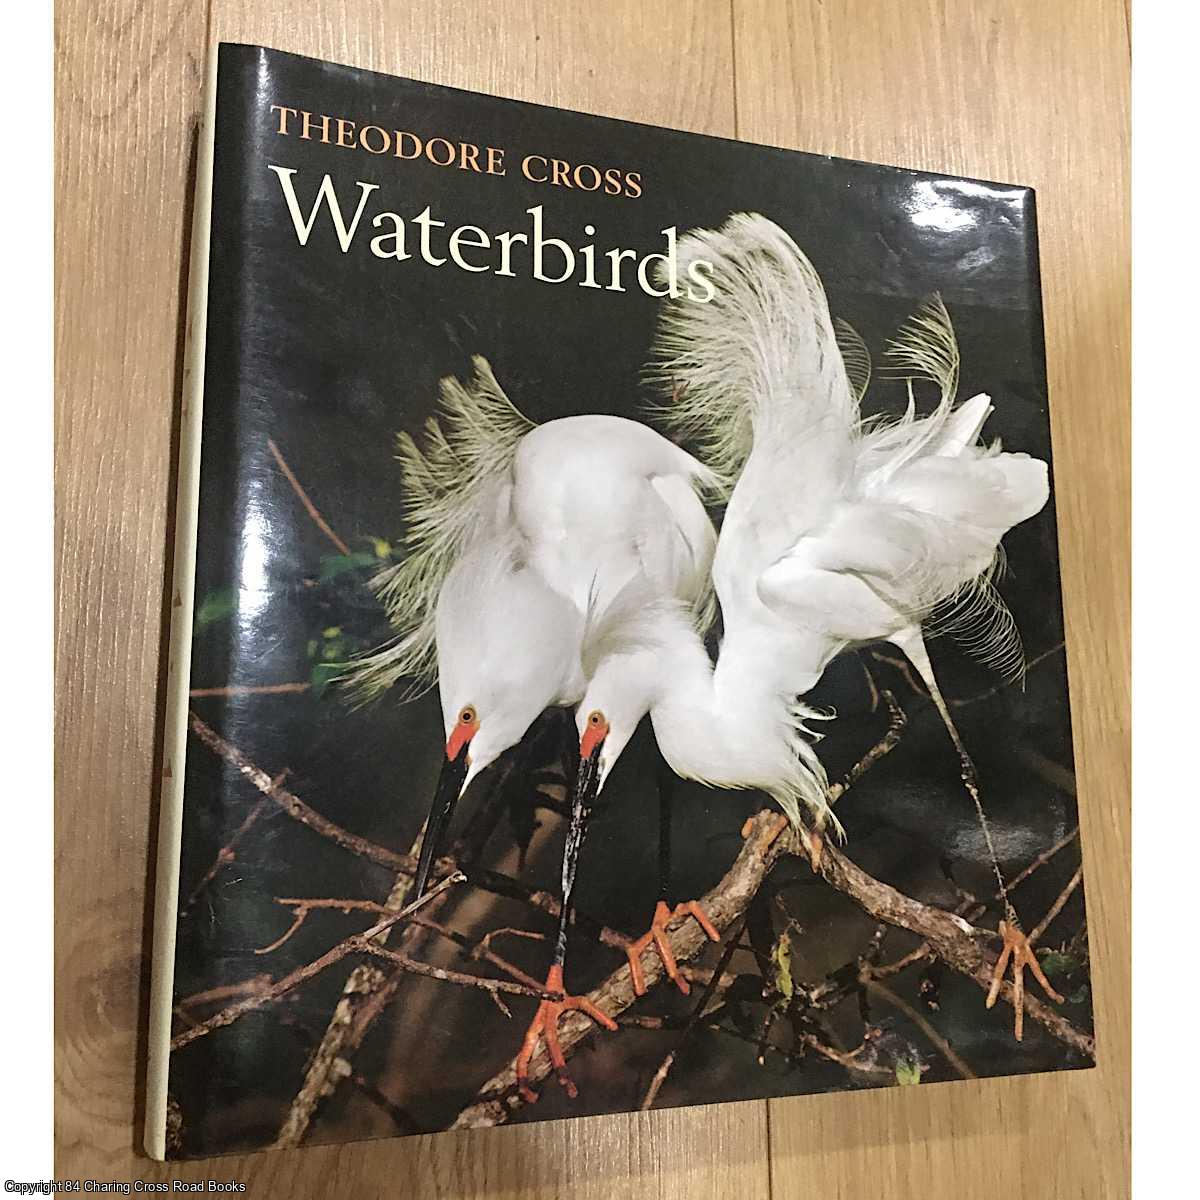 Cross, Theodore - Waterbirds